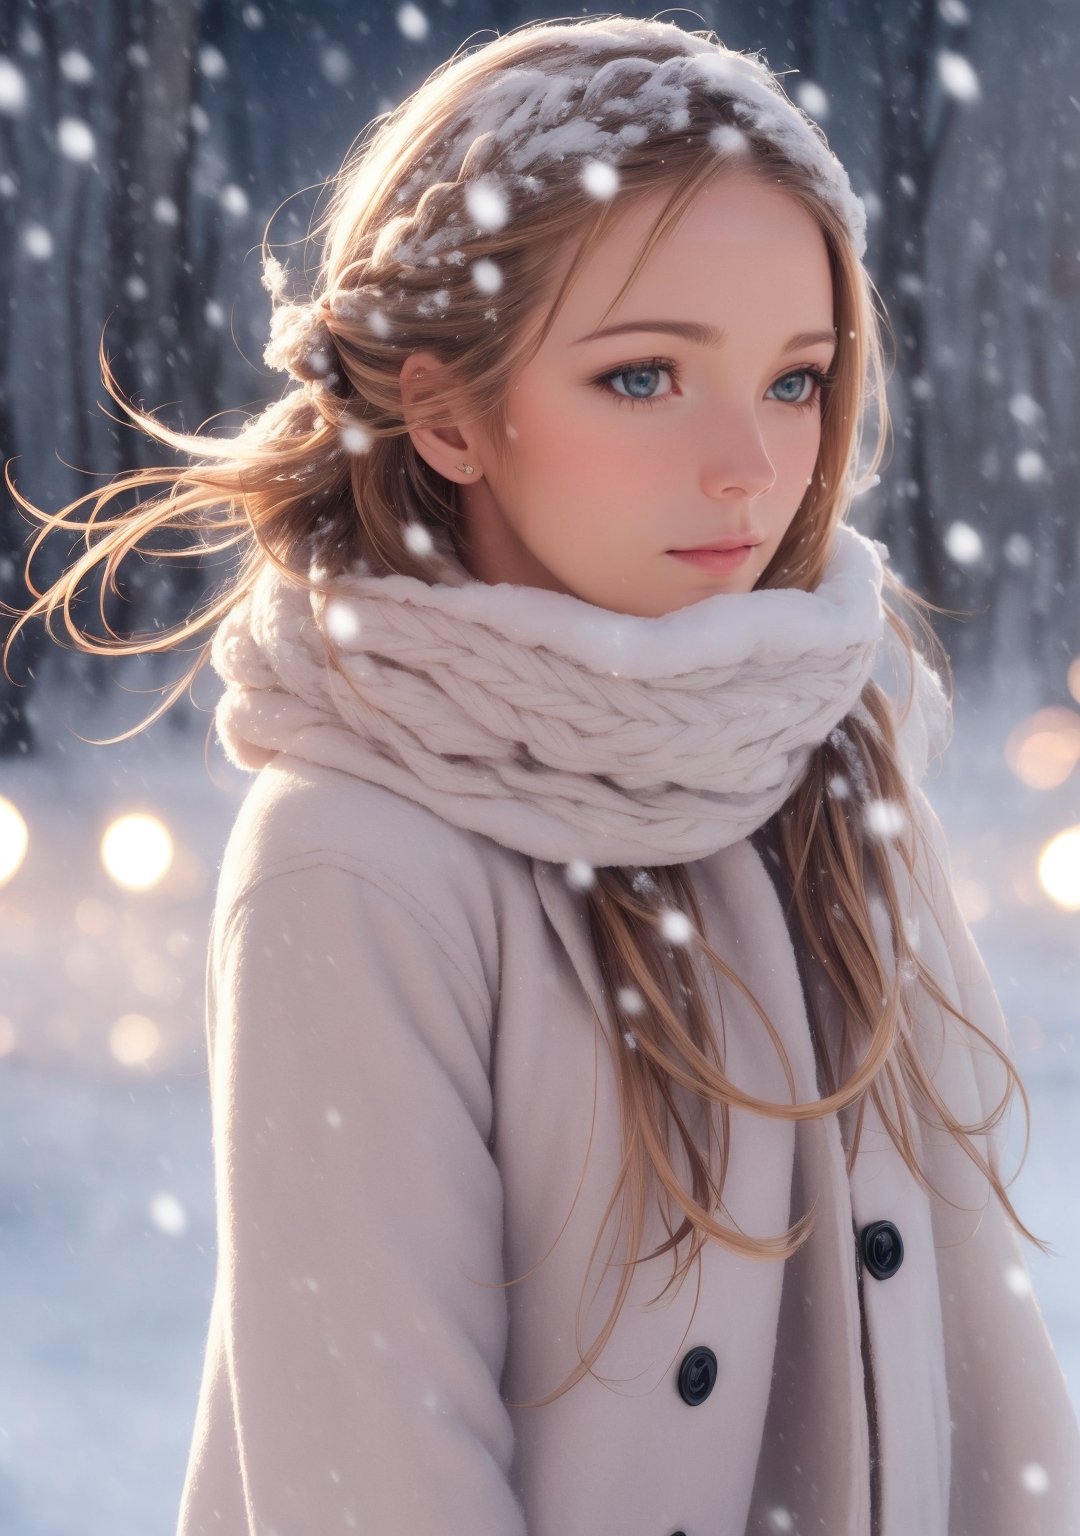 a beautiful woman, looking into camera, hair ribbons,
snowing, winter lights, ,photorealistic